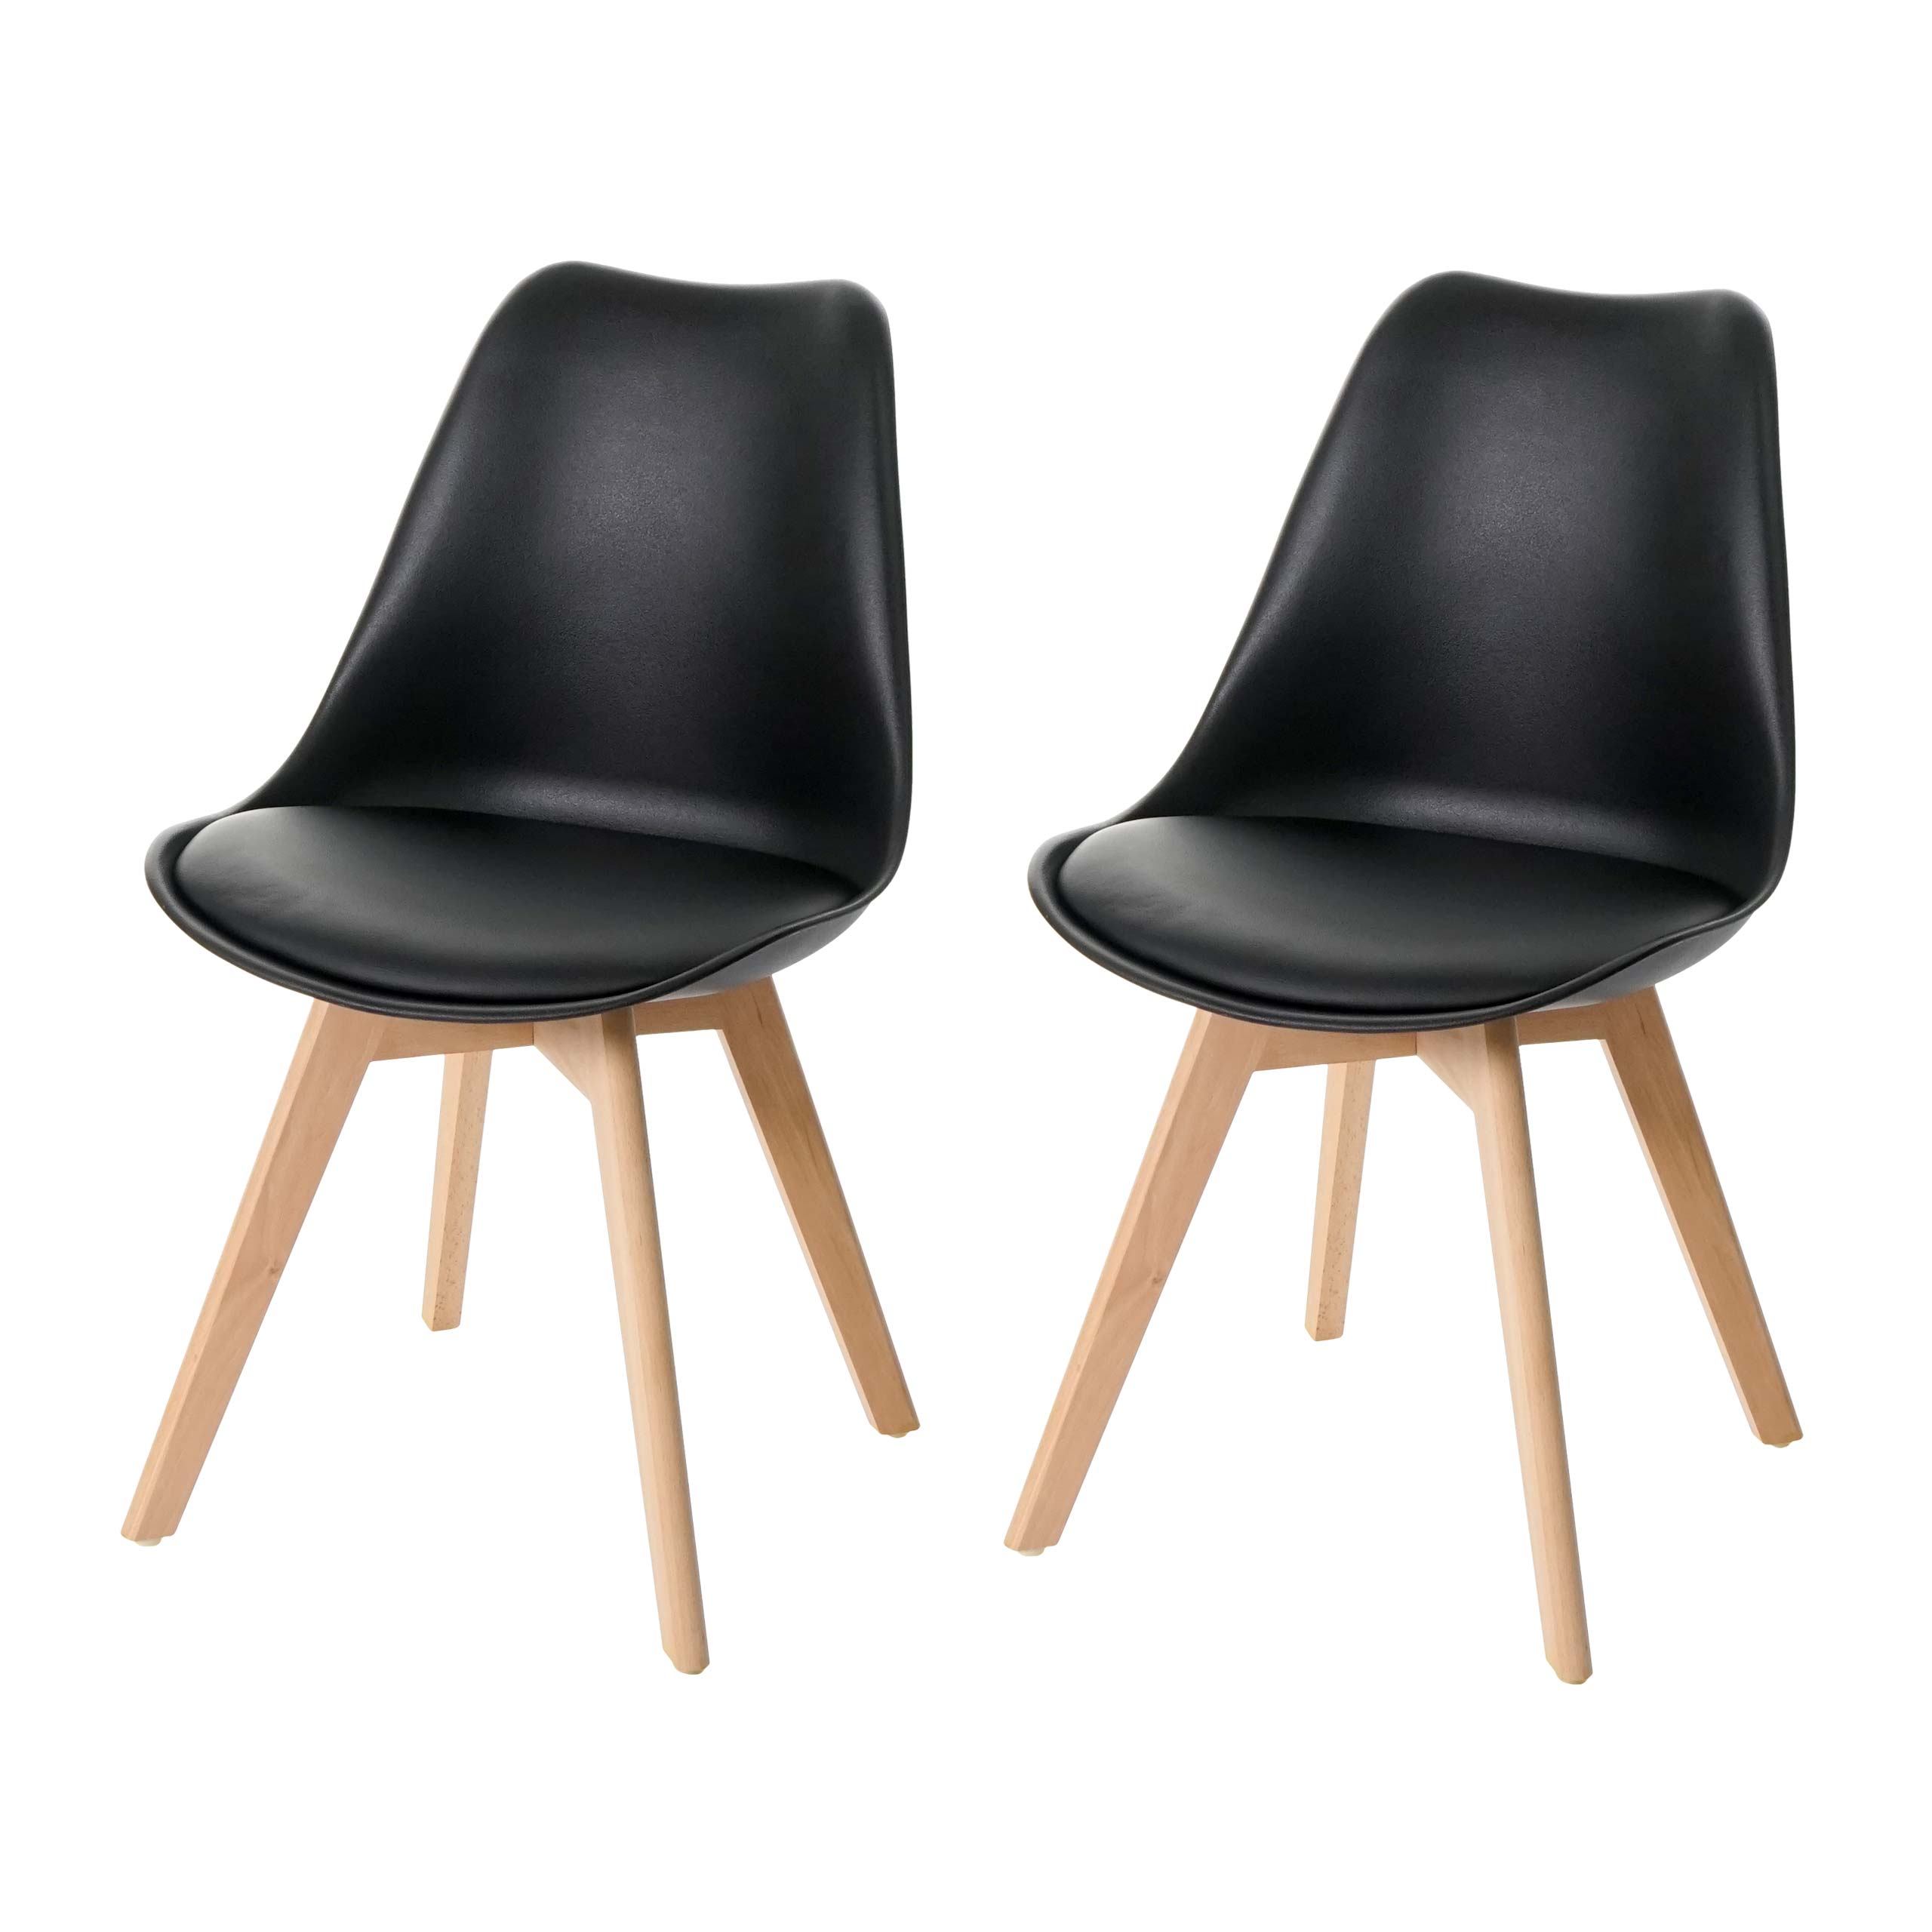 Stuhl Küchenstuhl Polsterstuhl Essstuhl 2x Esszimmerstuhl HWC-E53 Retro Design 